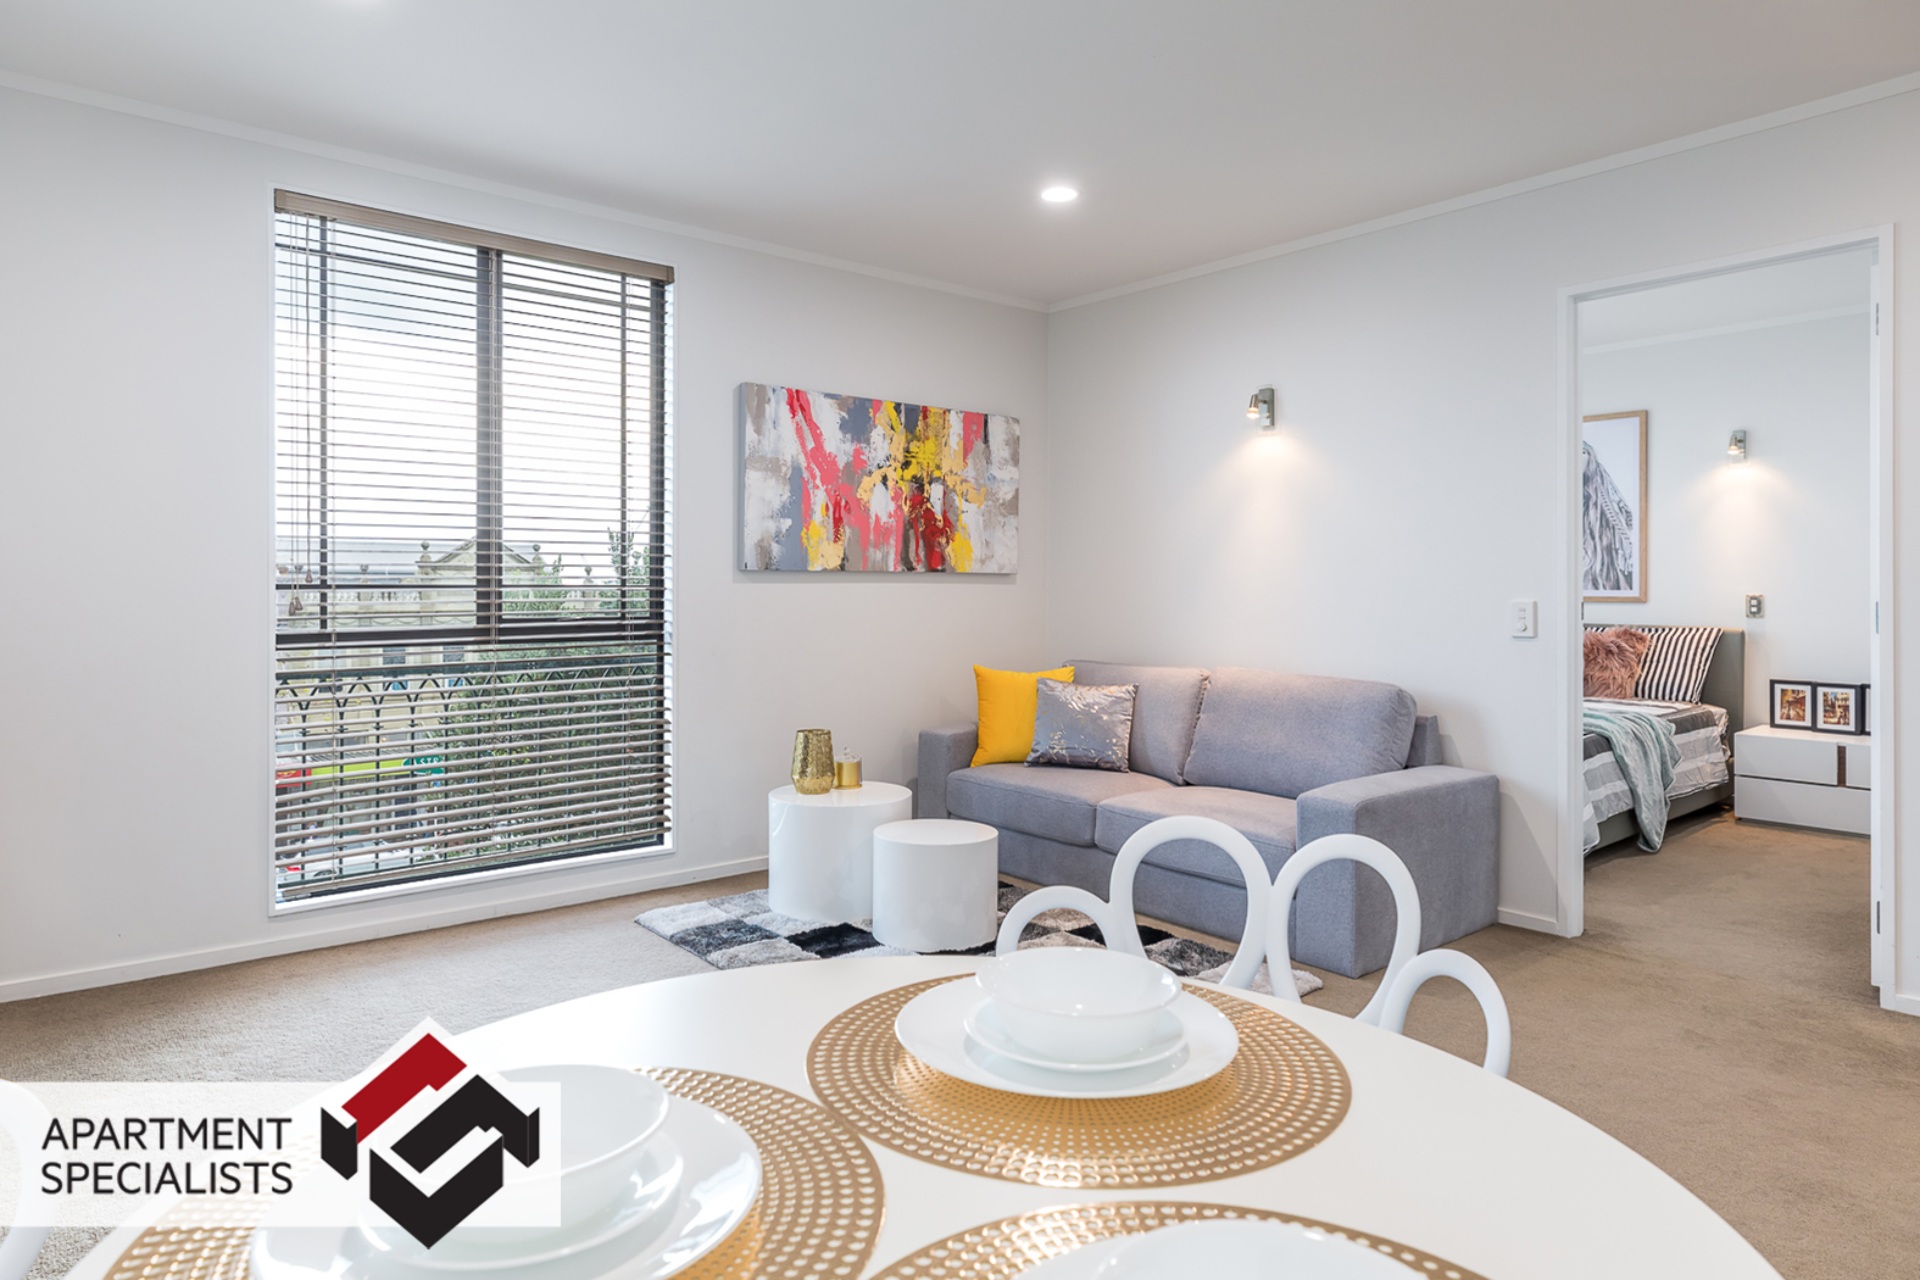 4 | 184 Symonds Street, Eden Terrace | Apartment Specialists